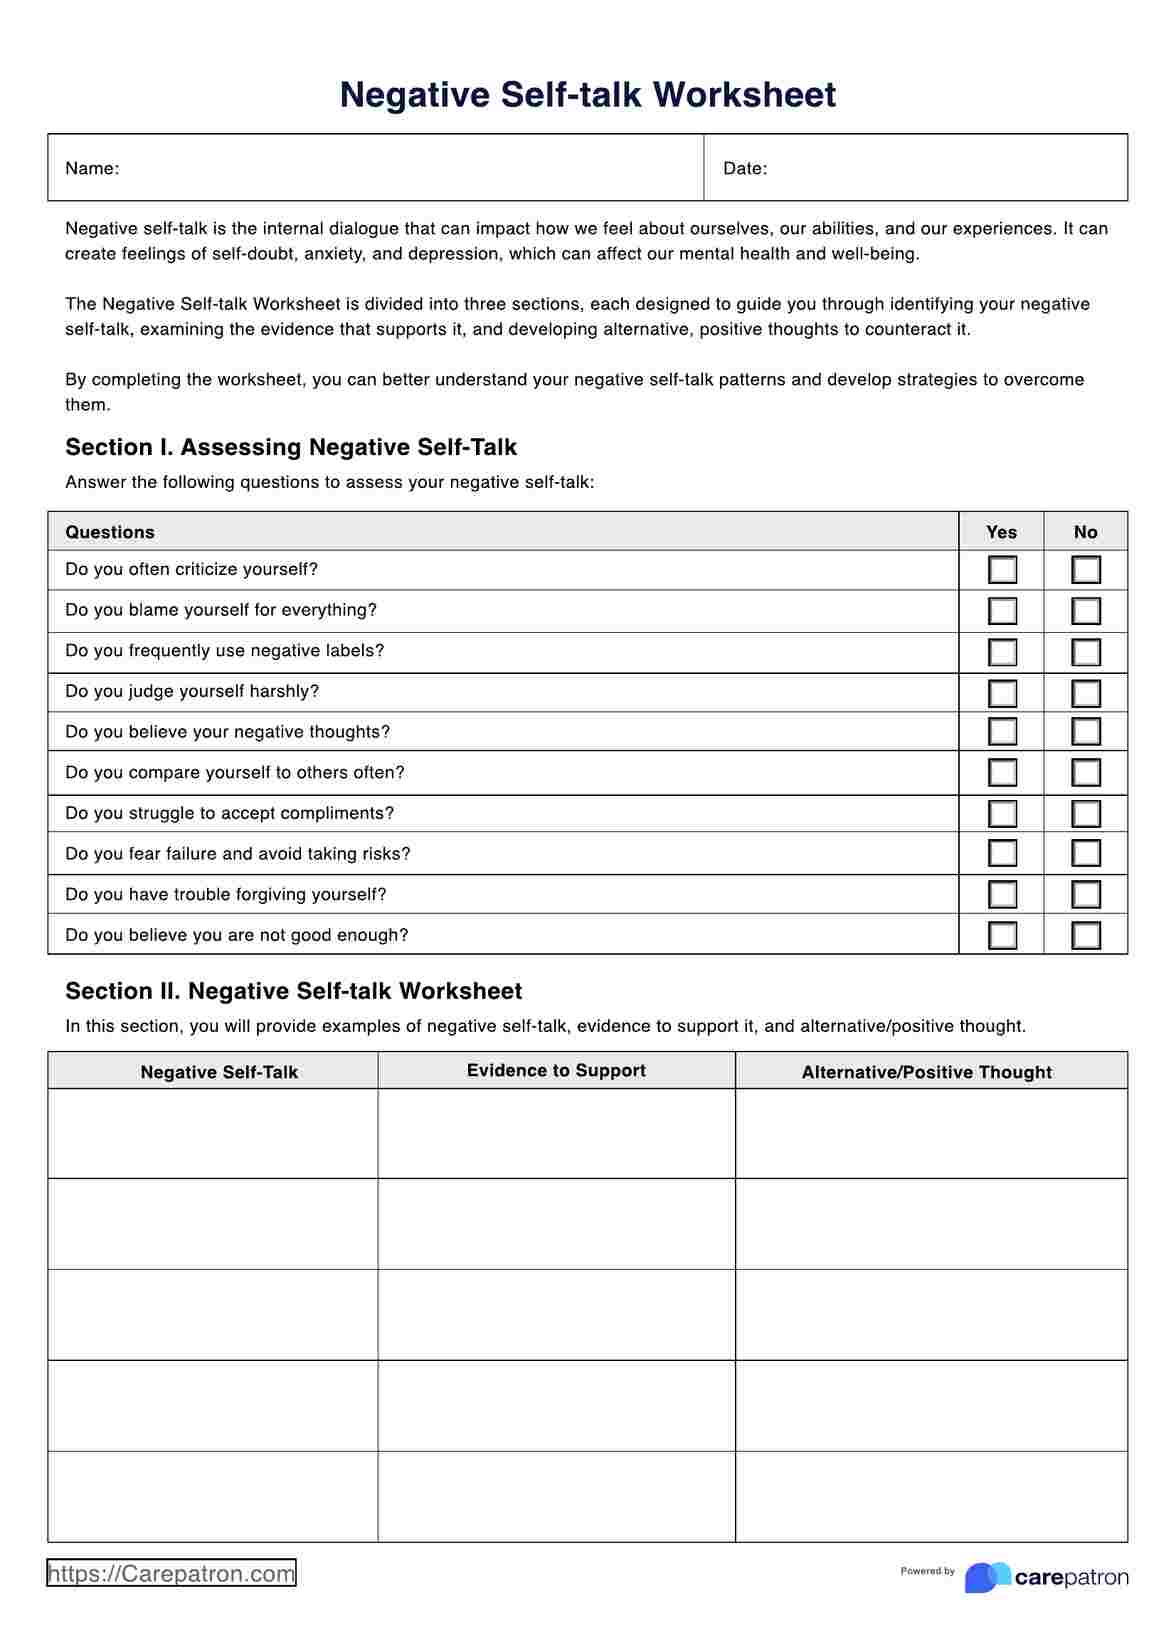 Negative Self-Talk Worksheet PDF Example